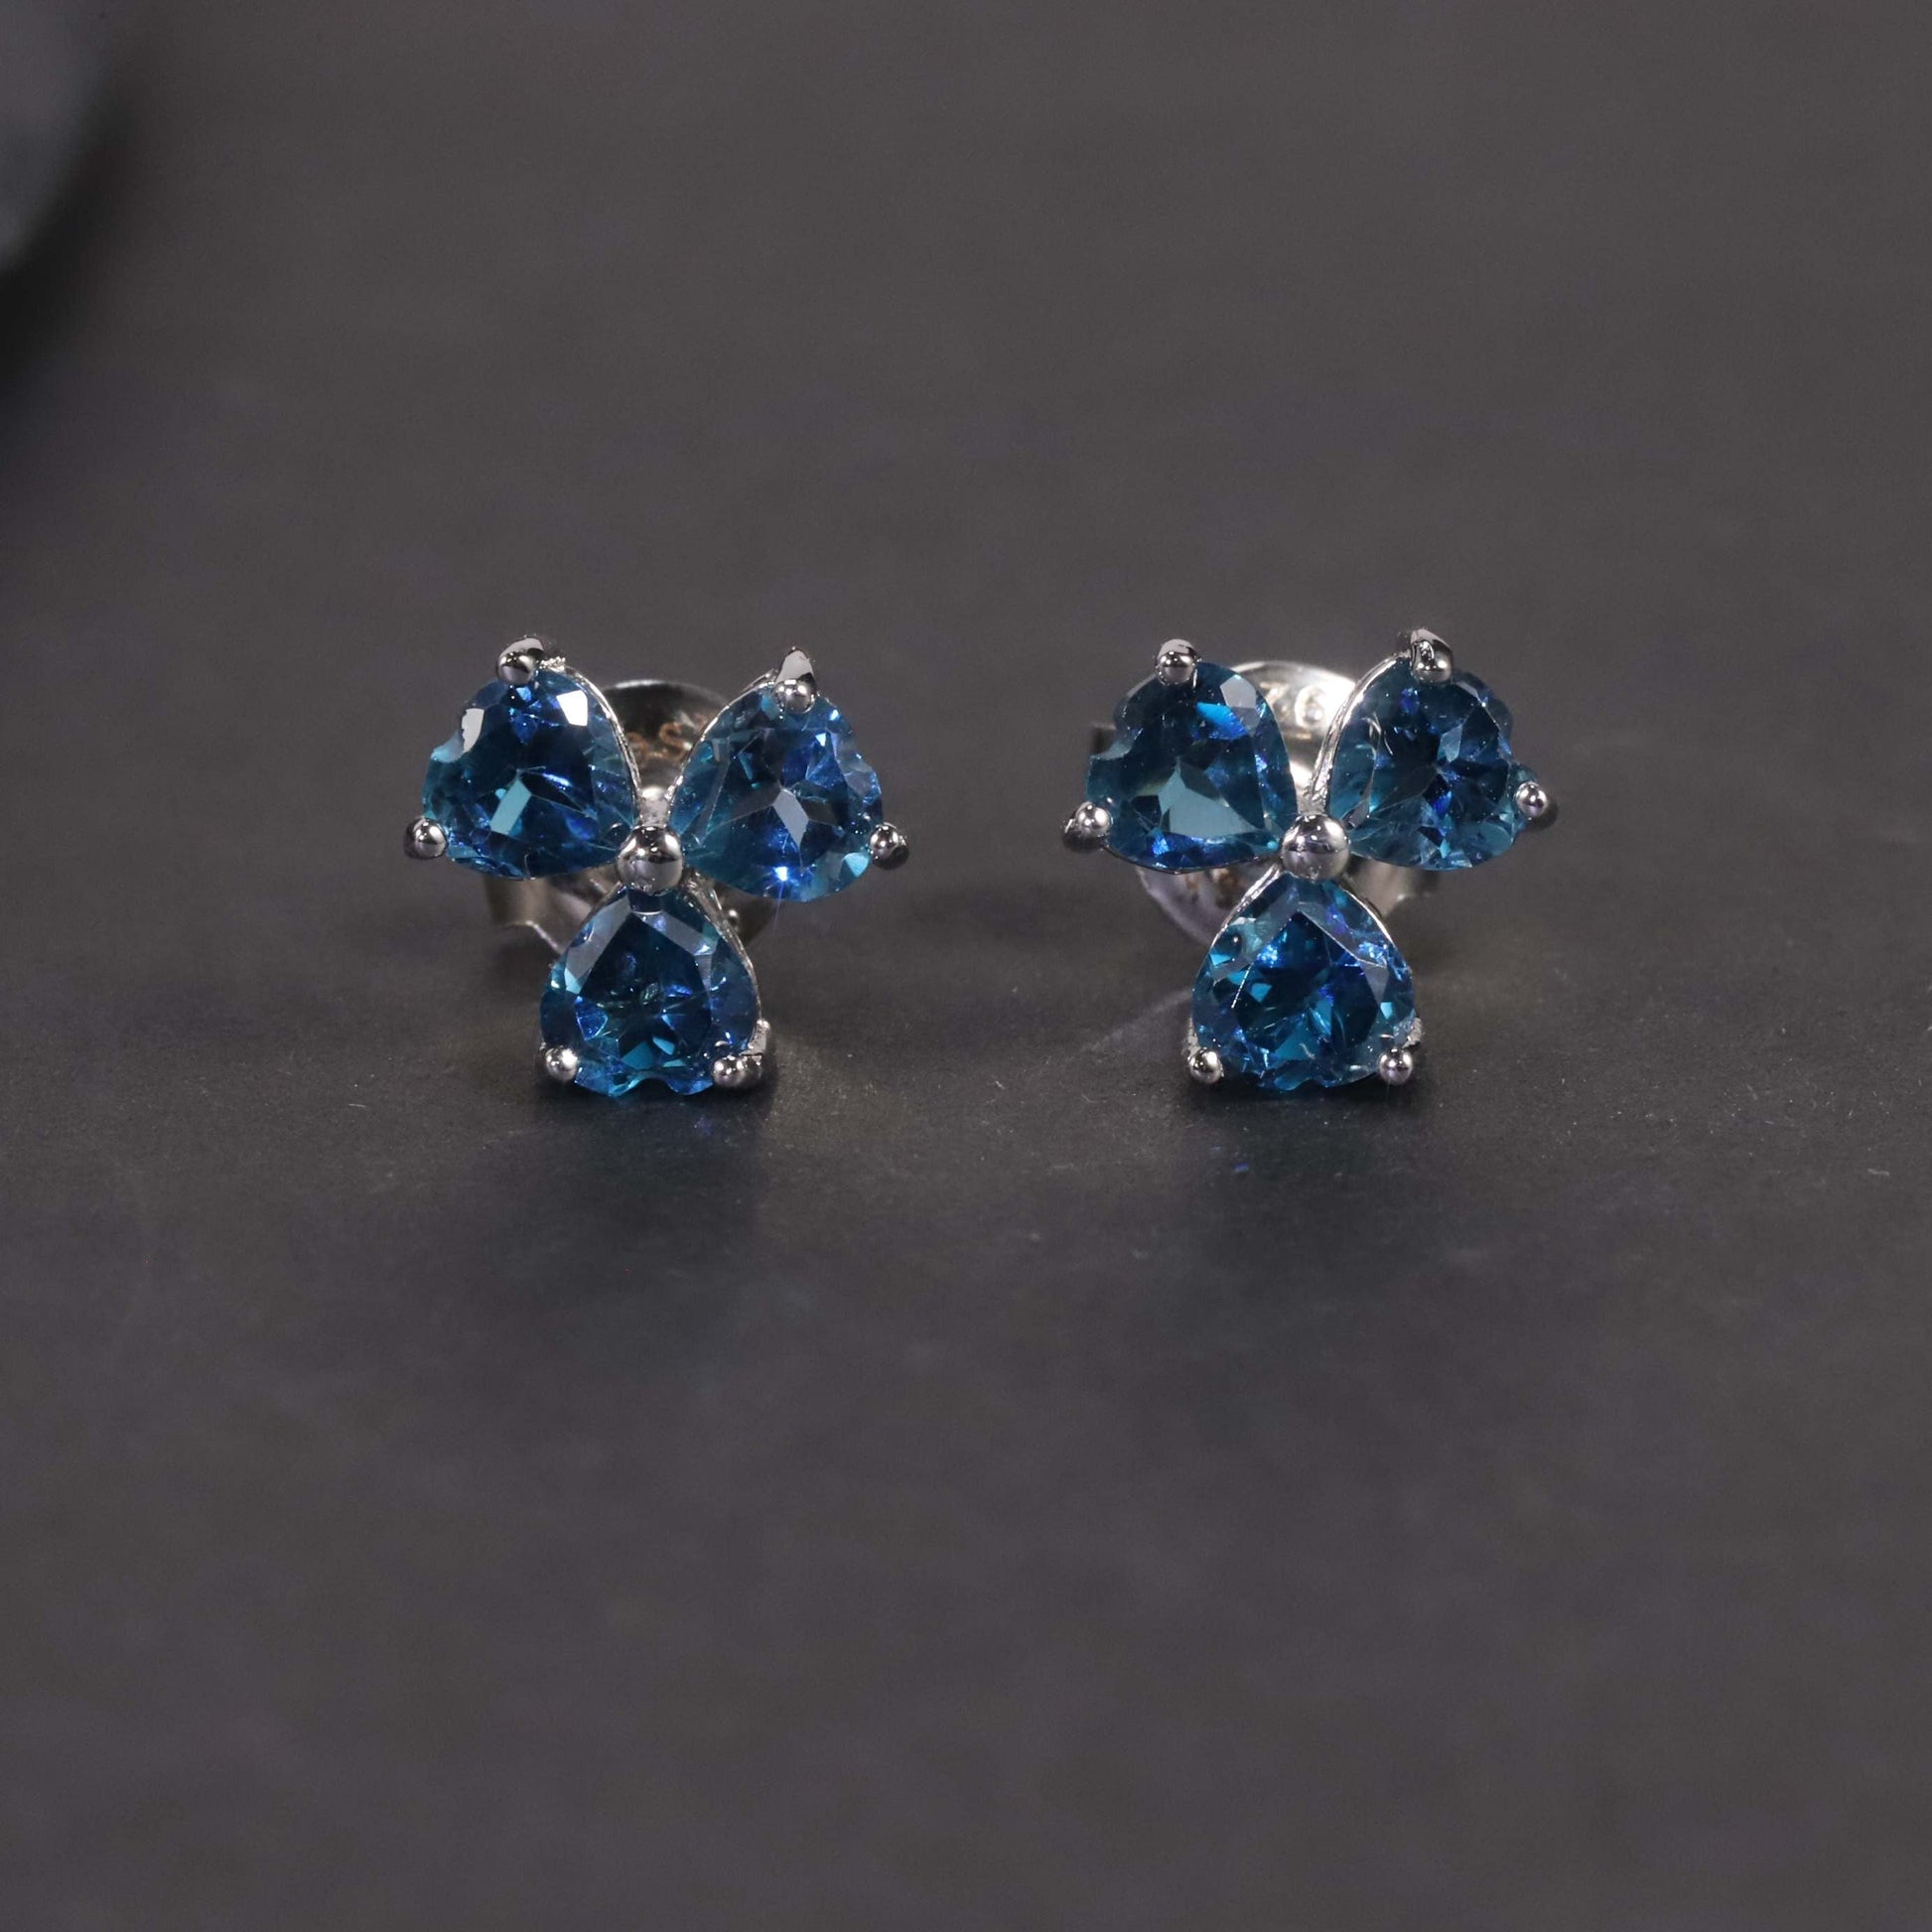  view on dark background of flower-shaped silver London blue topaz jewellery